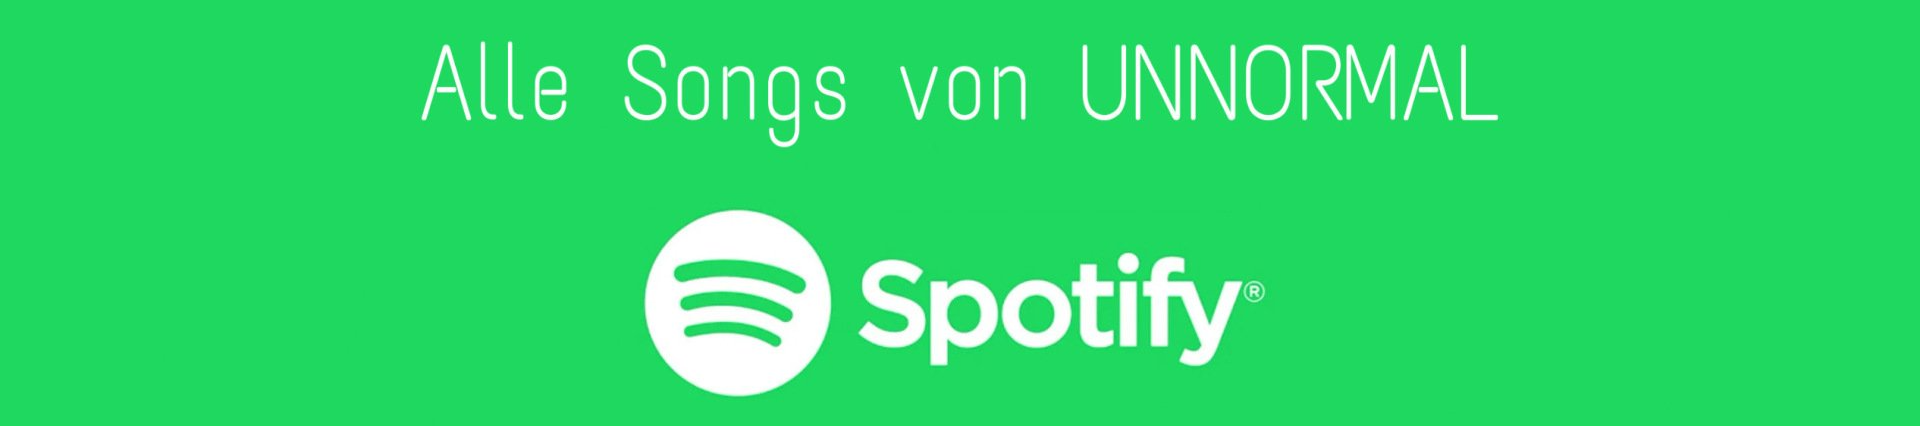 Spotify Link Unnormal